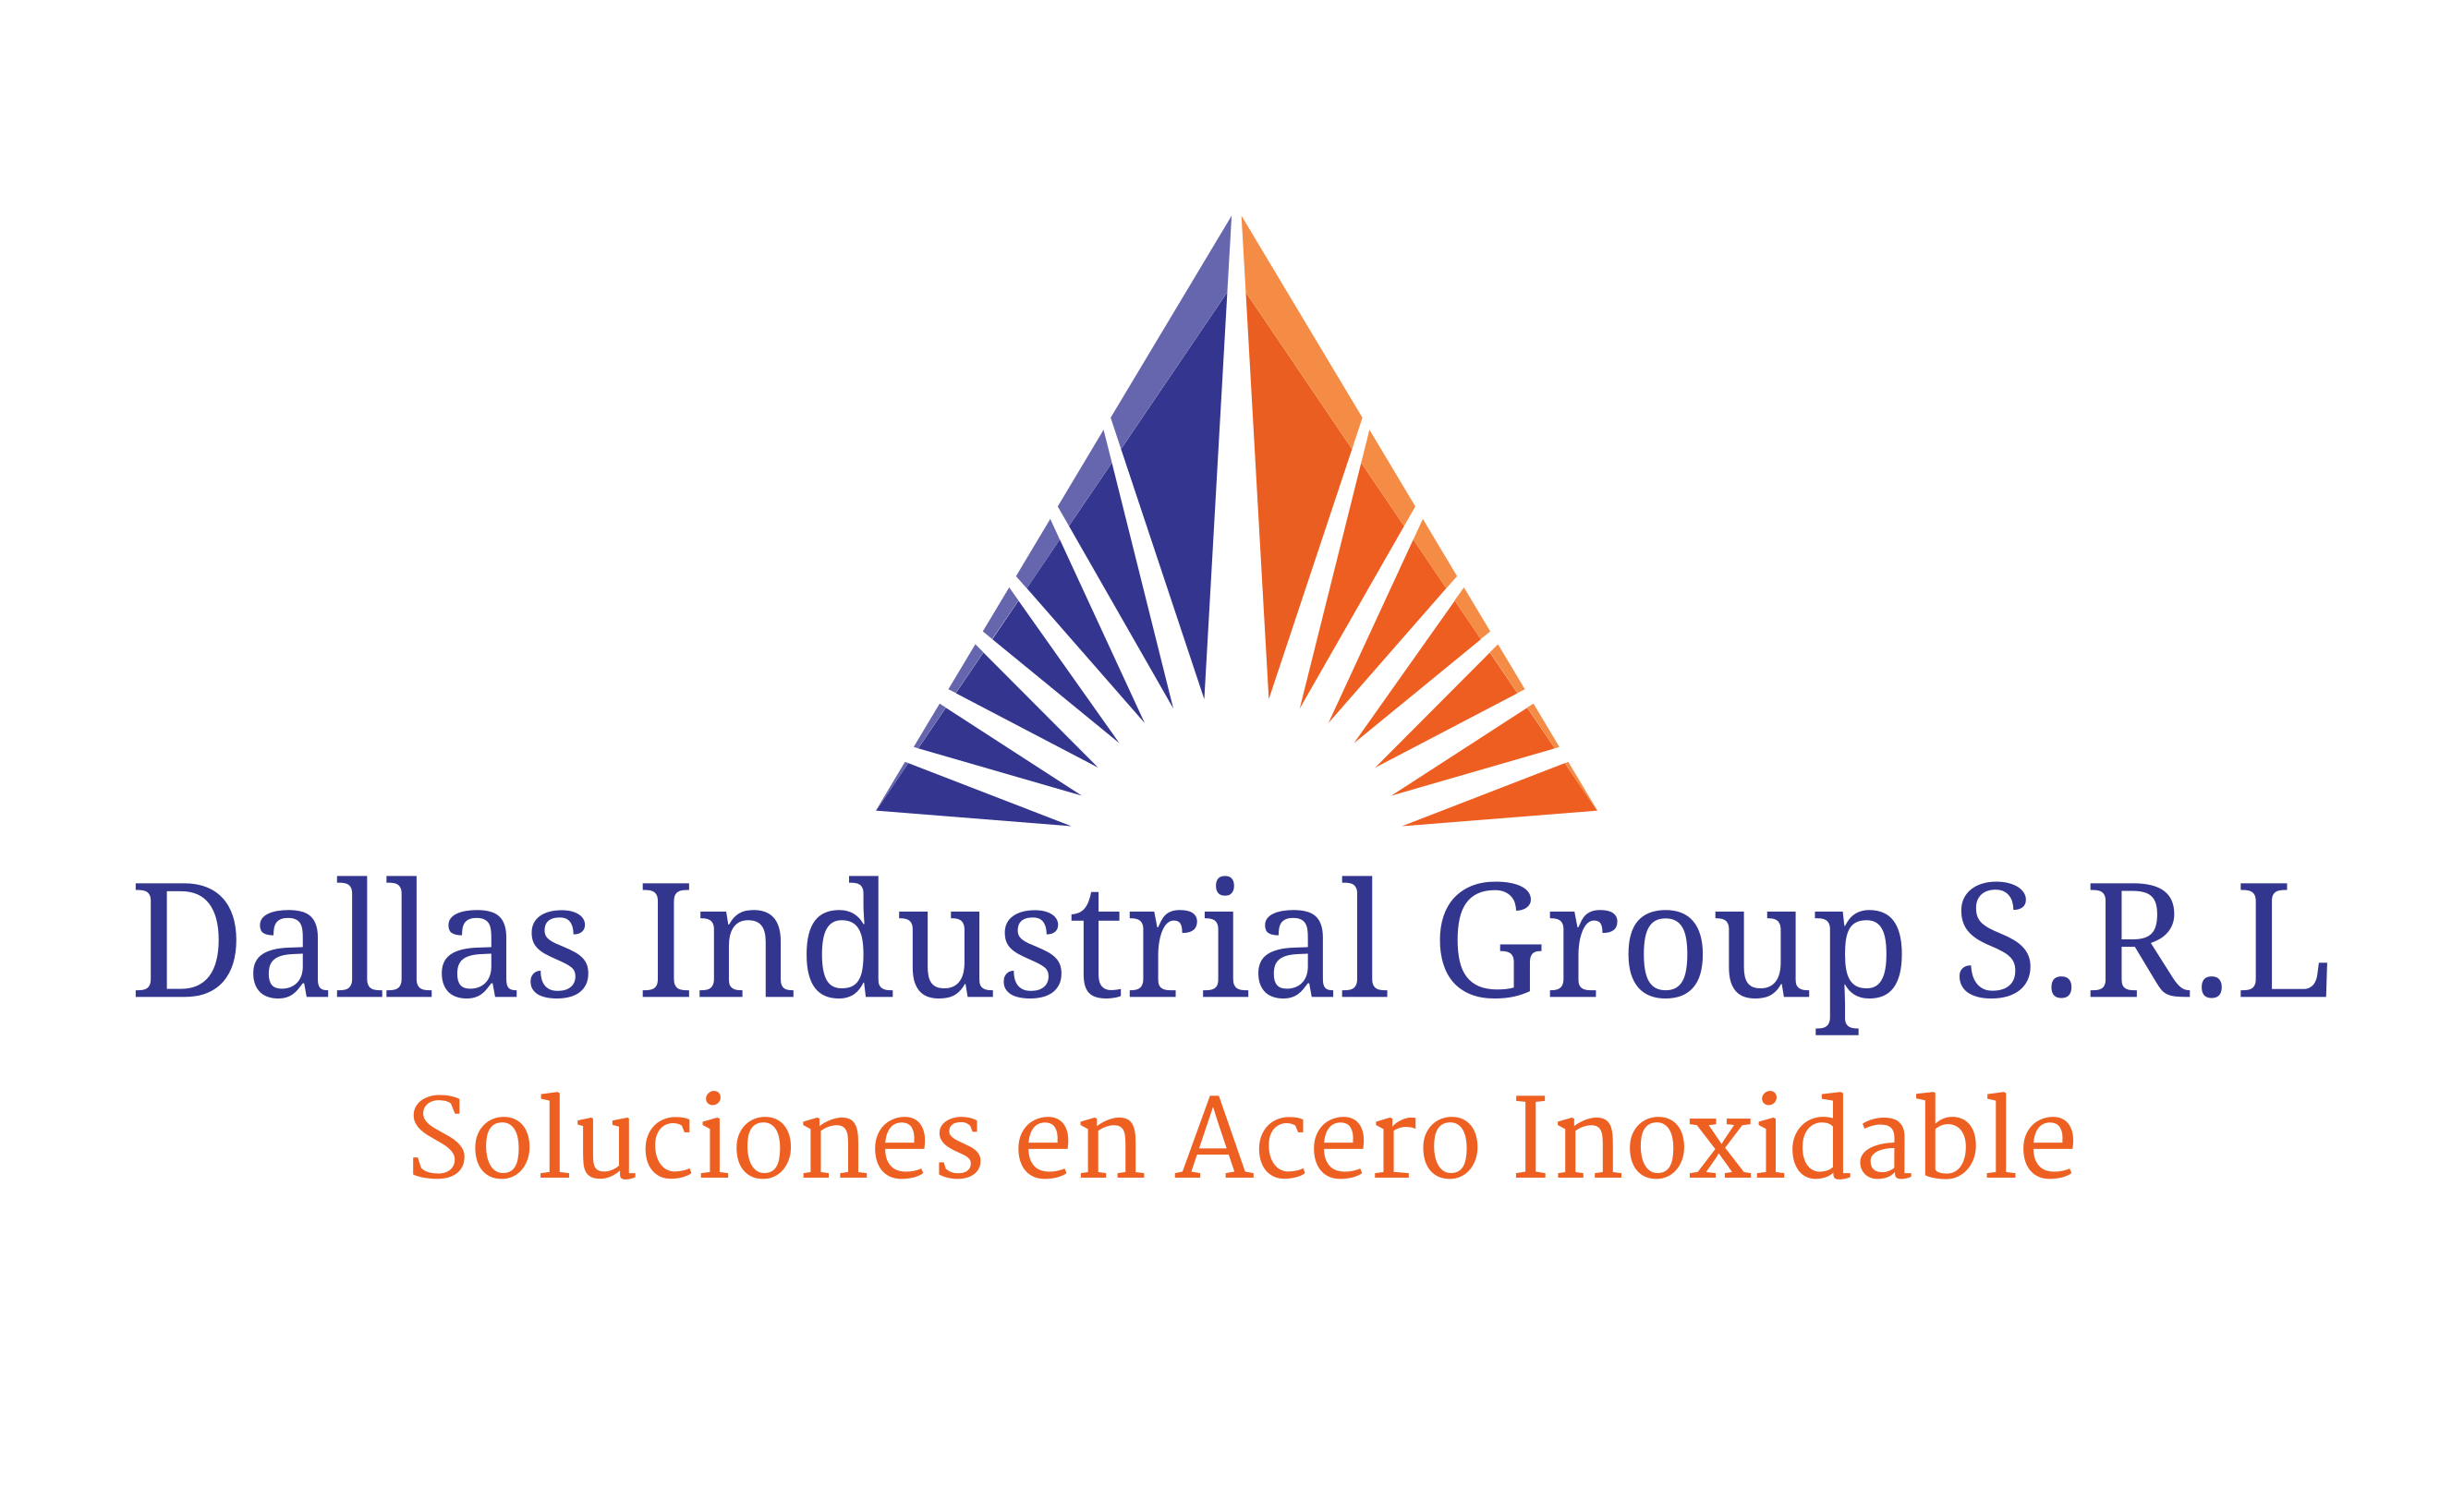 Dallas Industrial Group